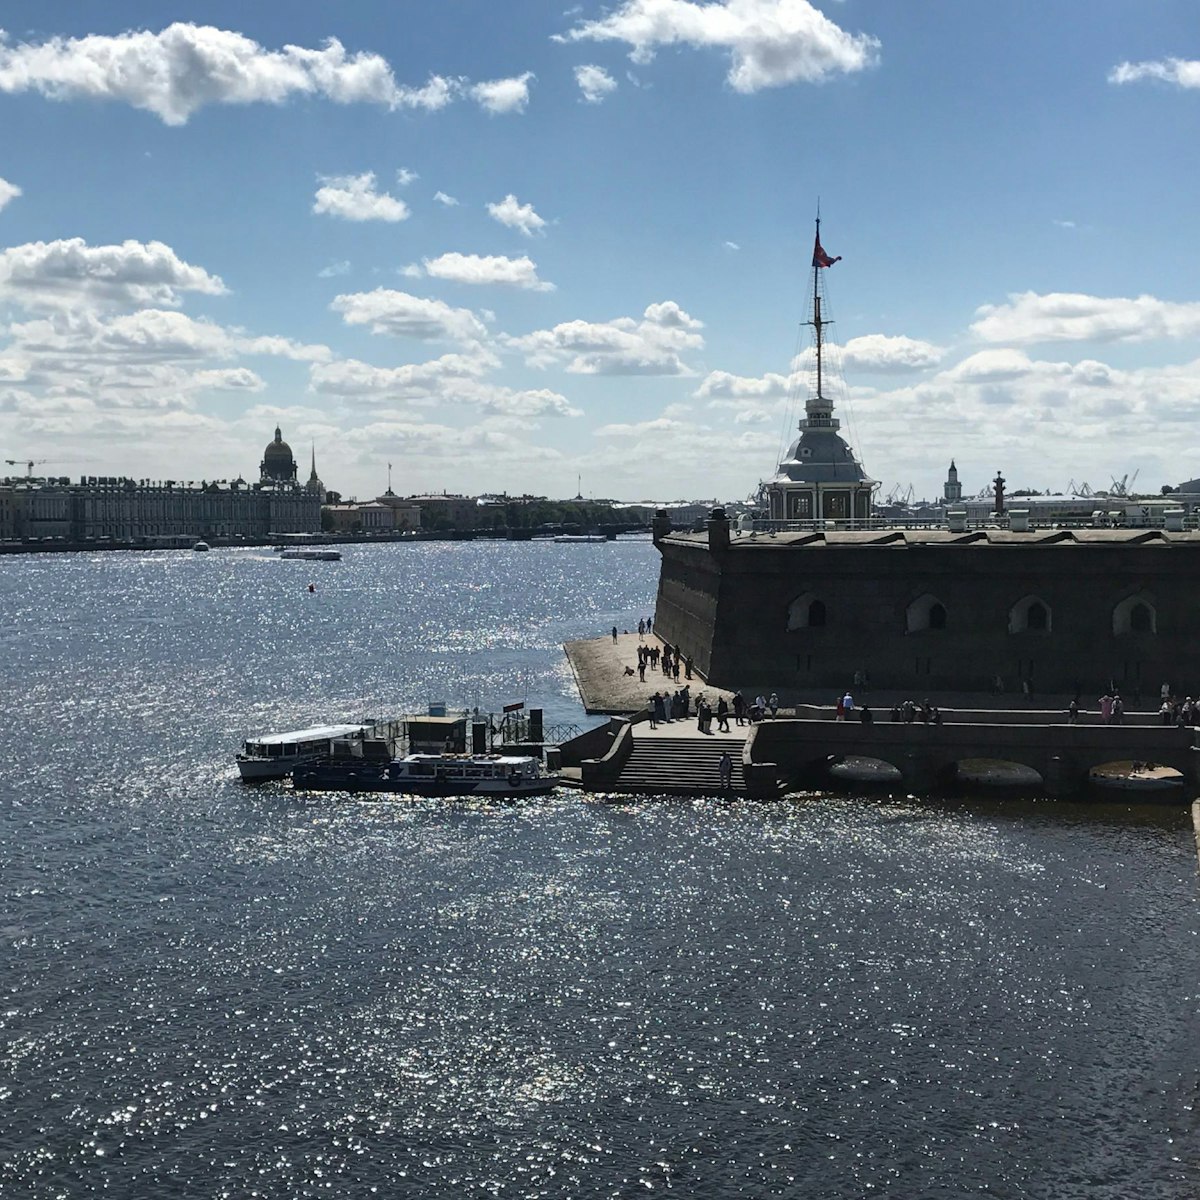 Naryshkin Bastion seen from across the Neva river in St Petersburg.